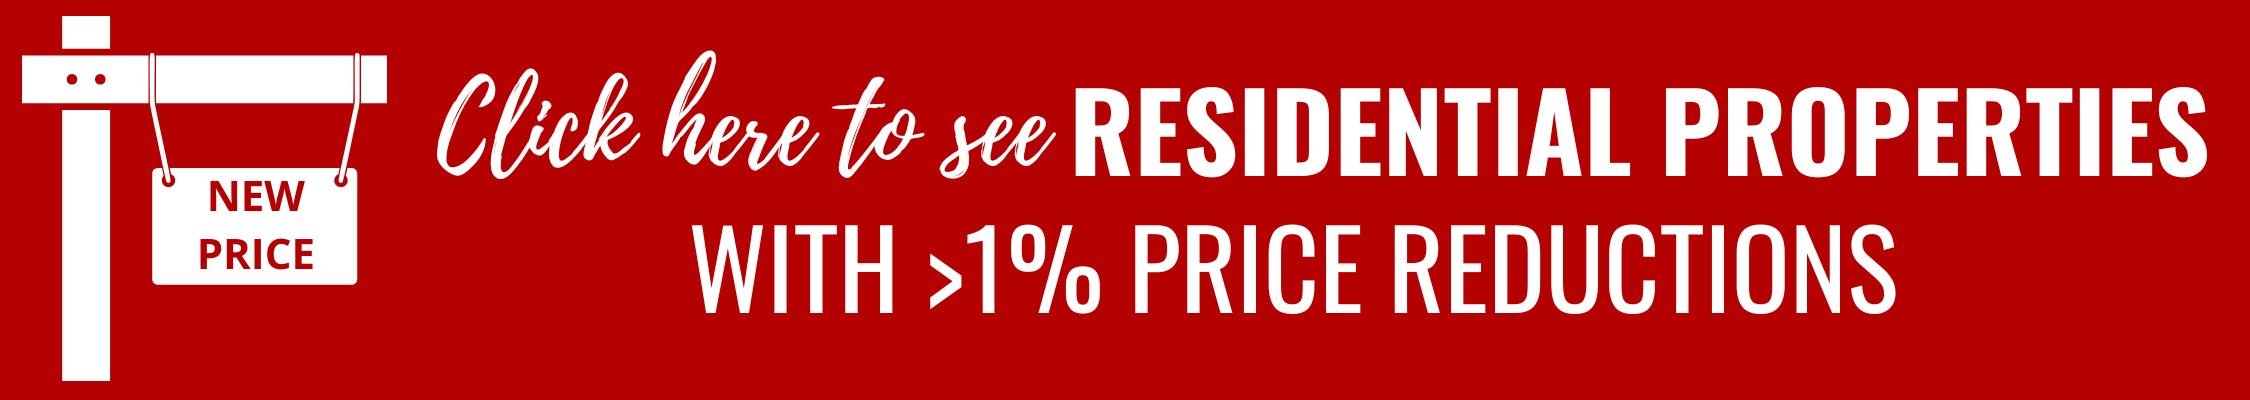 Price-Reduced Properties